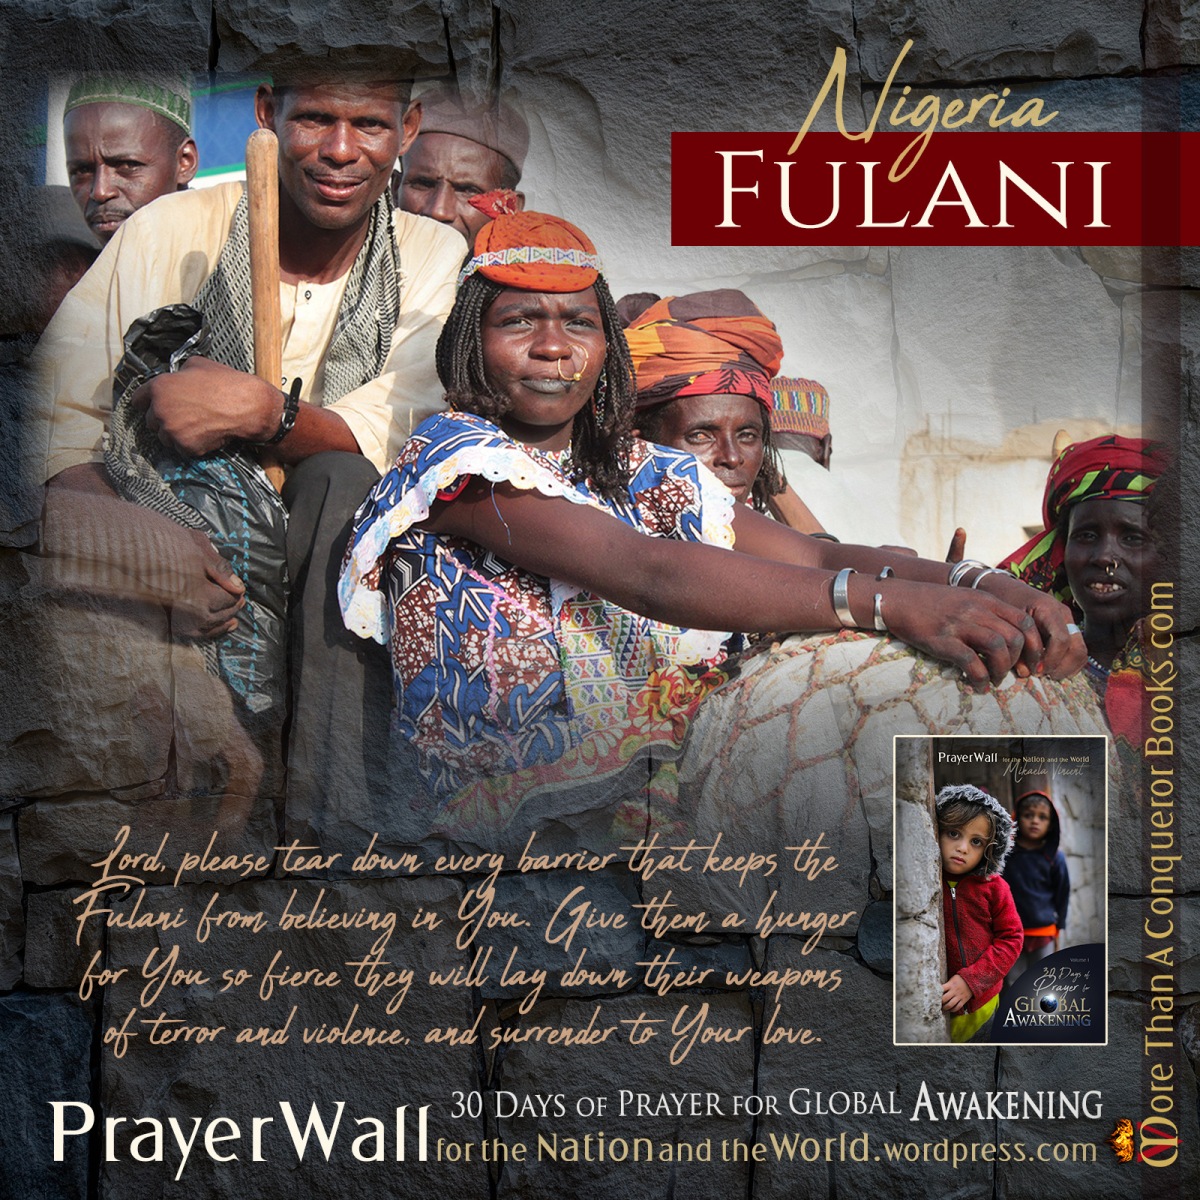 Fulani Muslims of Nigeria